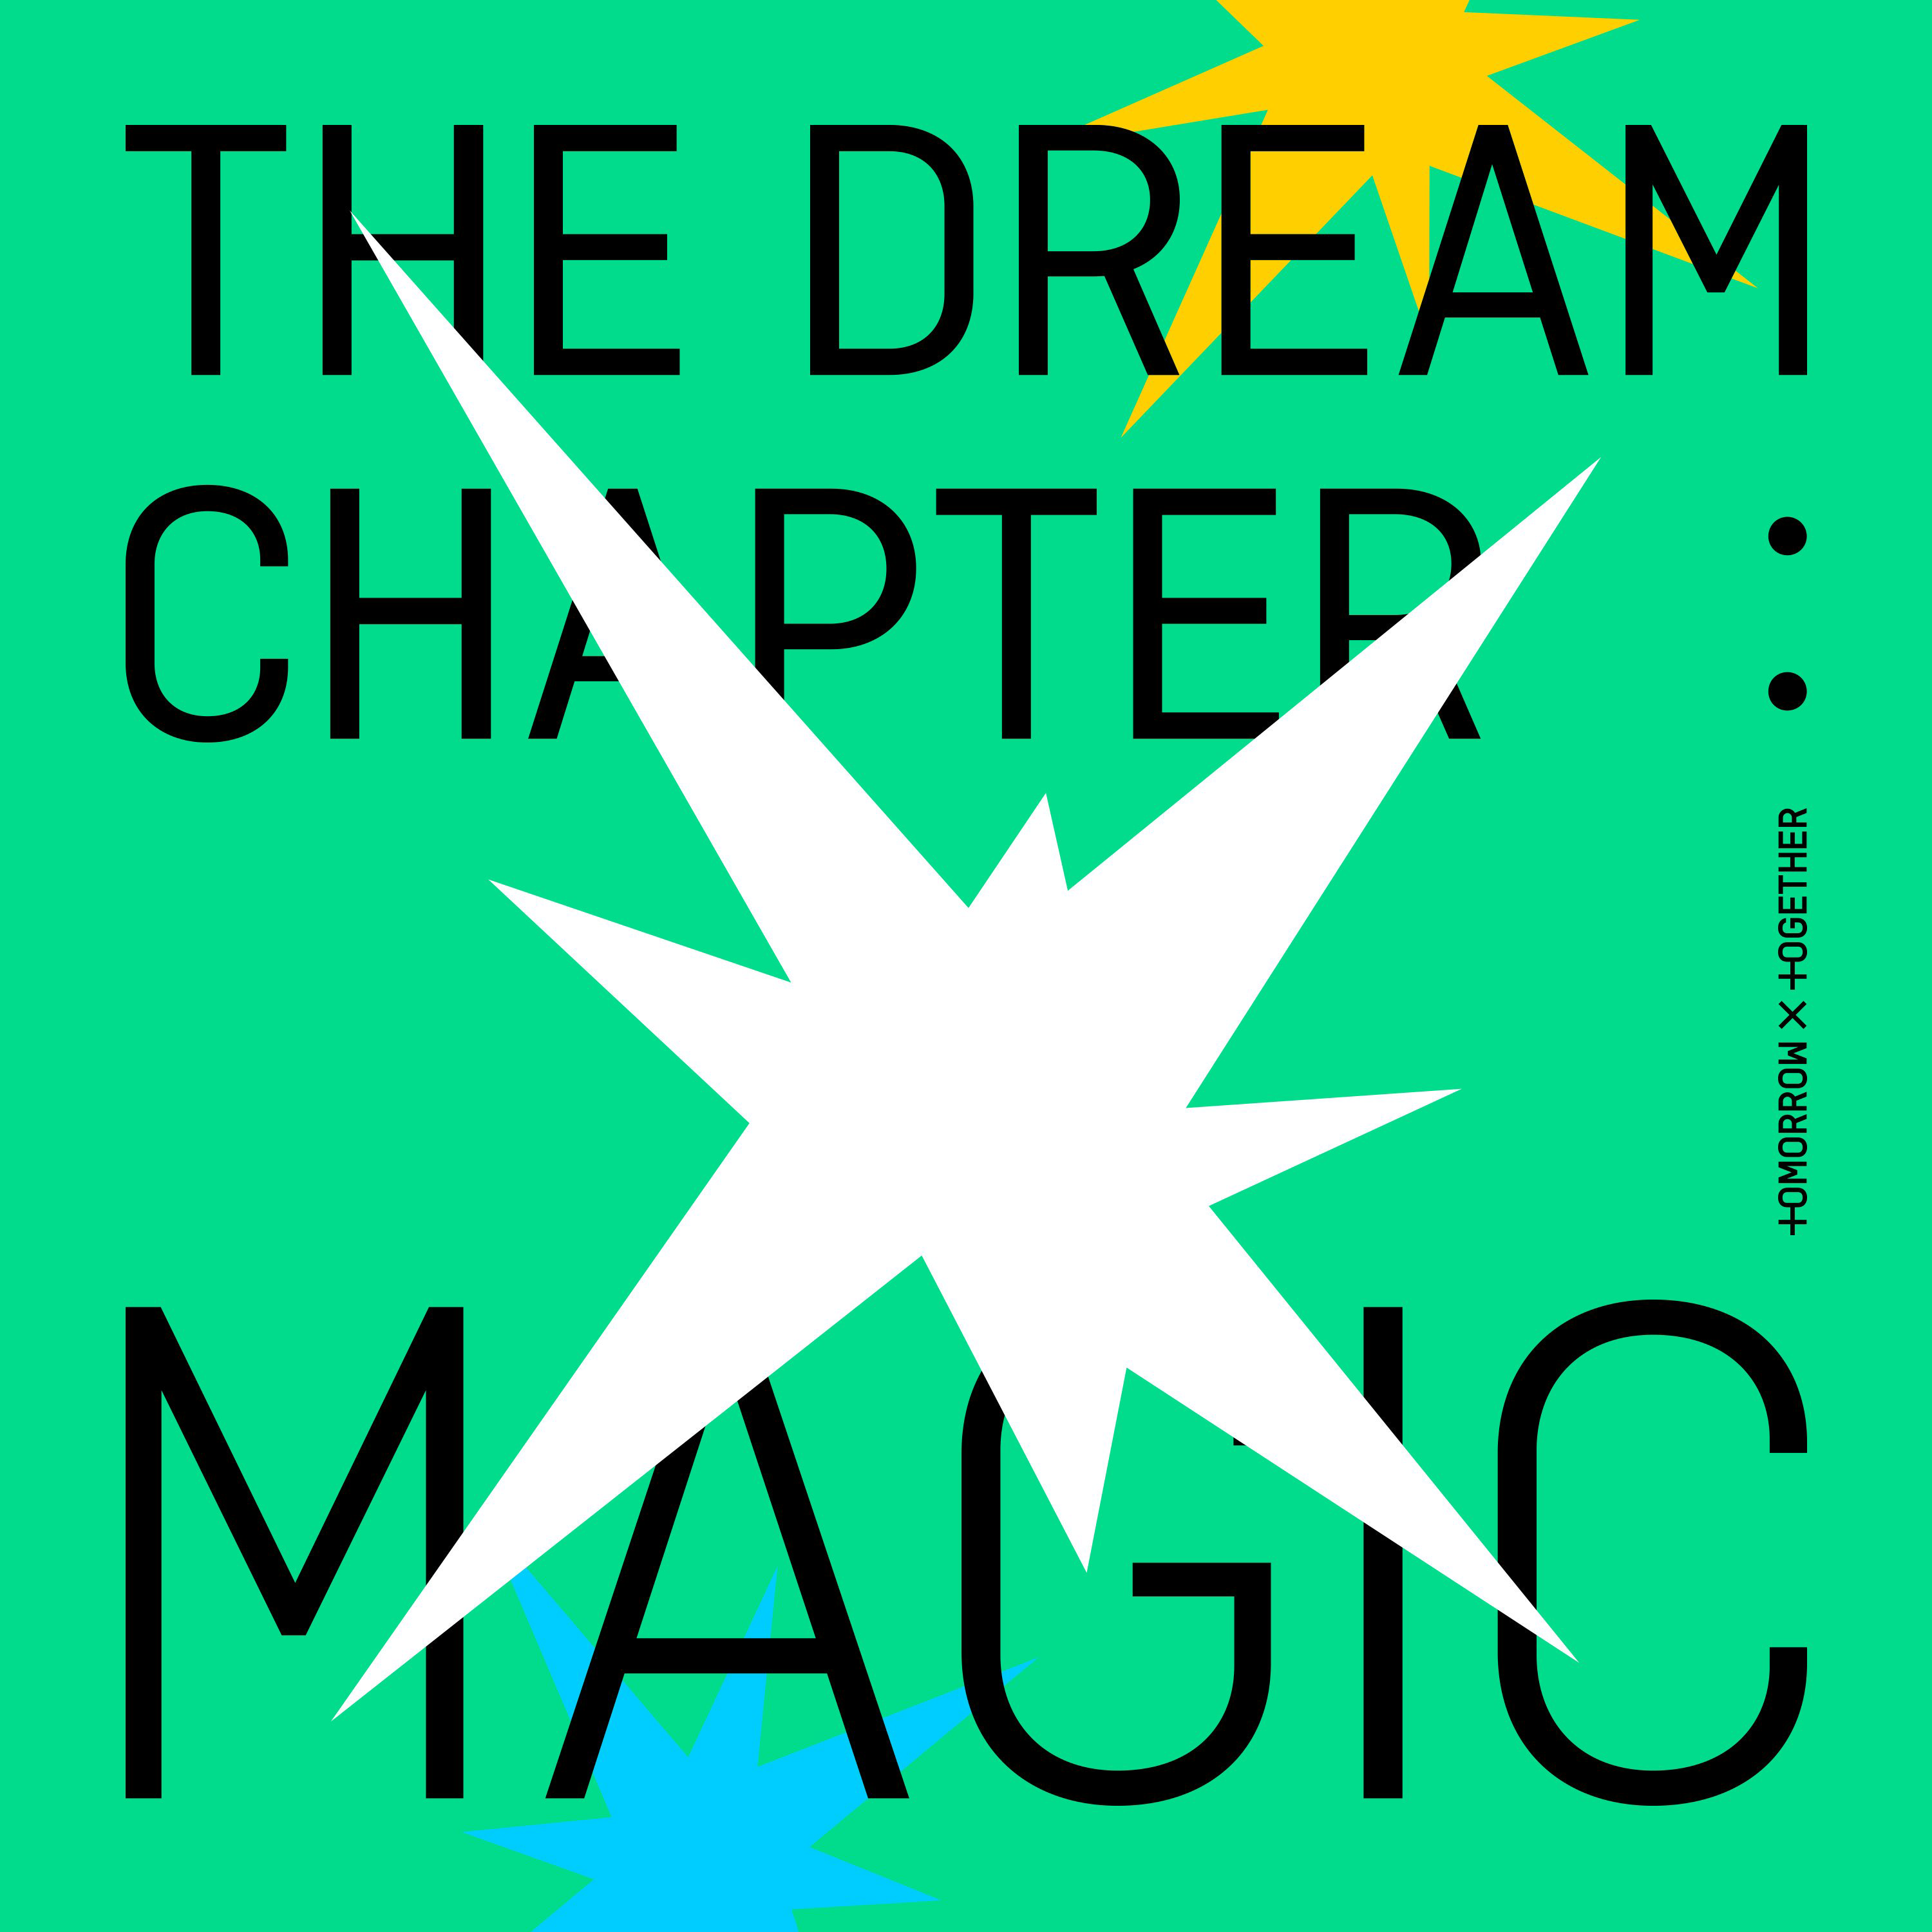 Runaway txt. The Dream Chapter: Magic альбом. The Dream Chapter: Magic tomorrow x together. Txt обложка альбома. Runaway txt обложка.